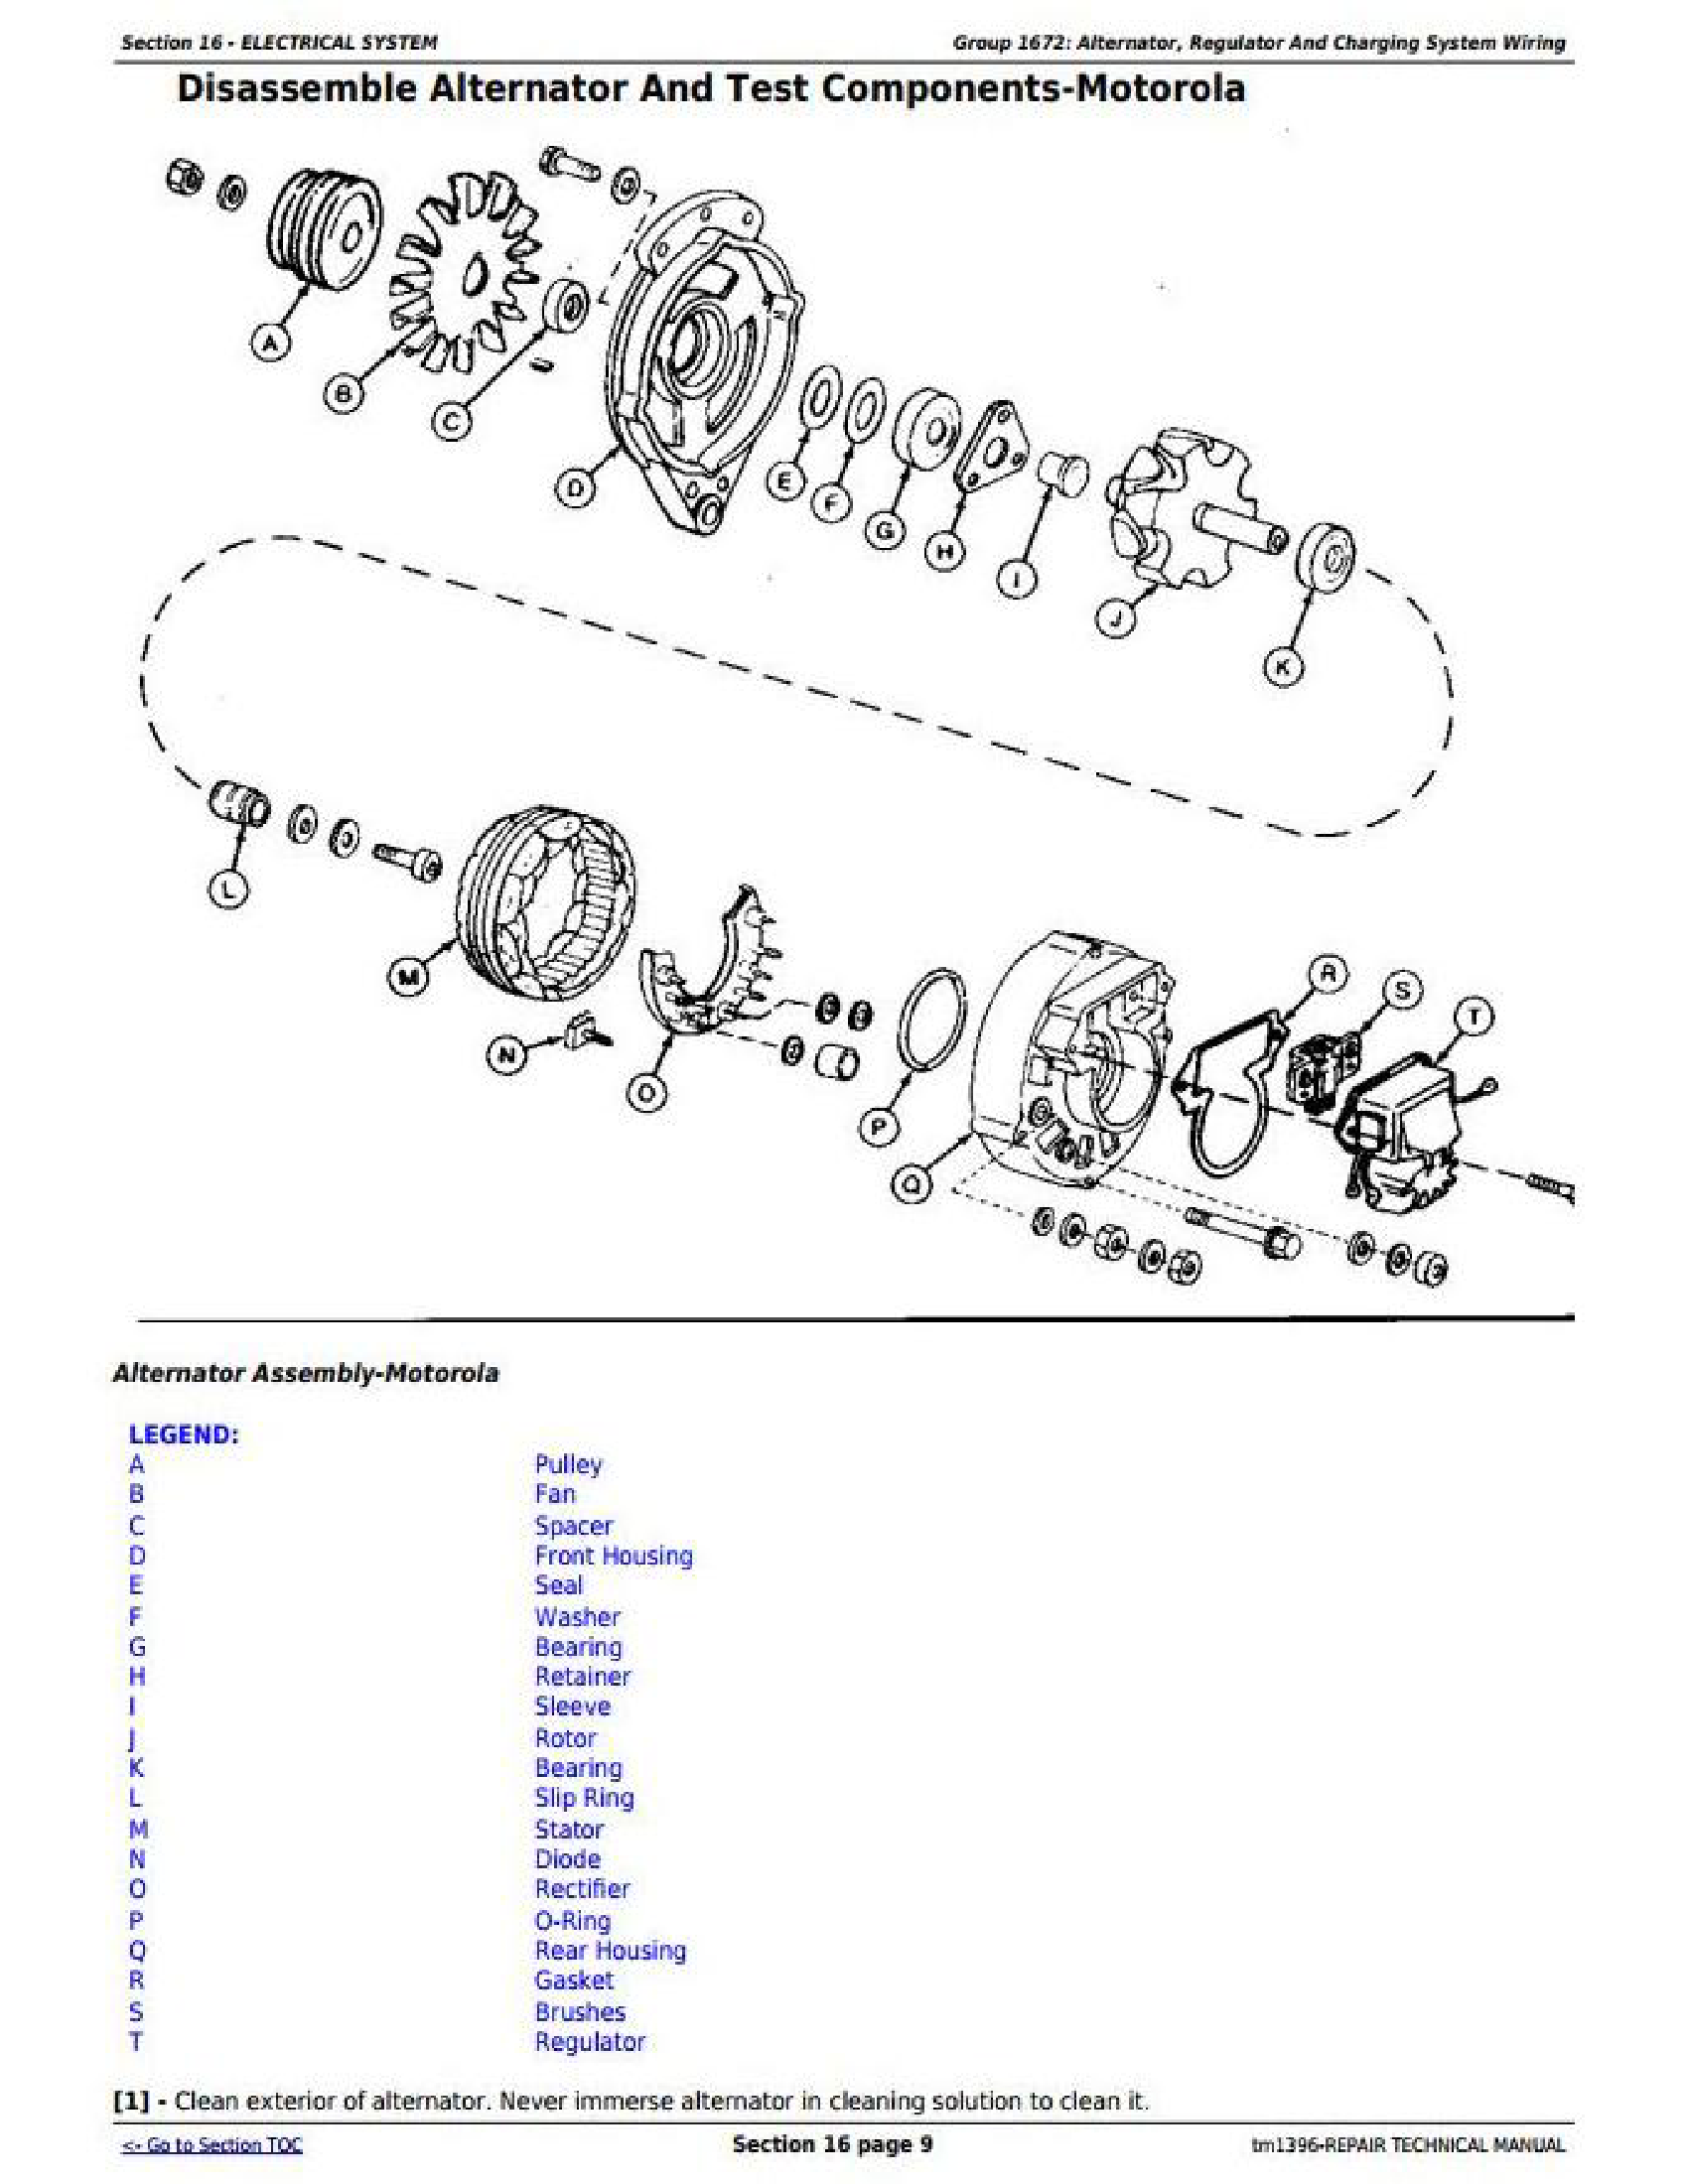 John Deere 1T0318G manual pdf